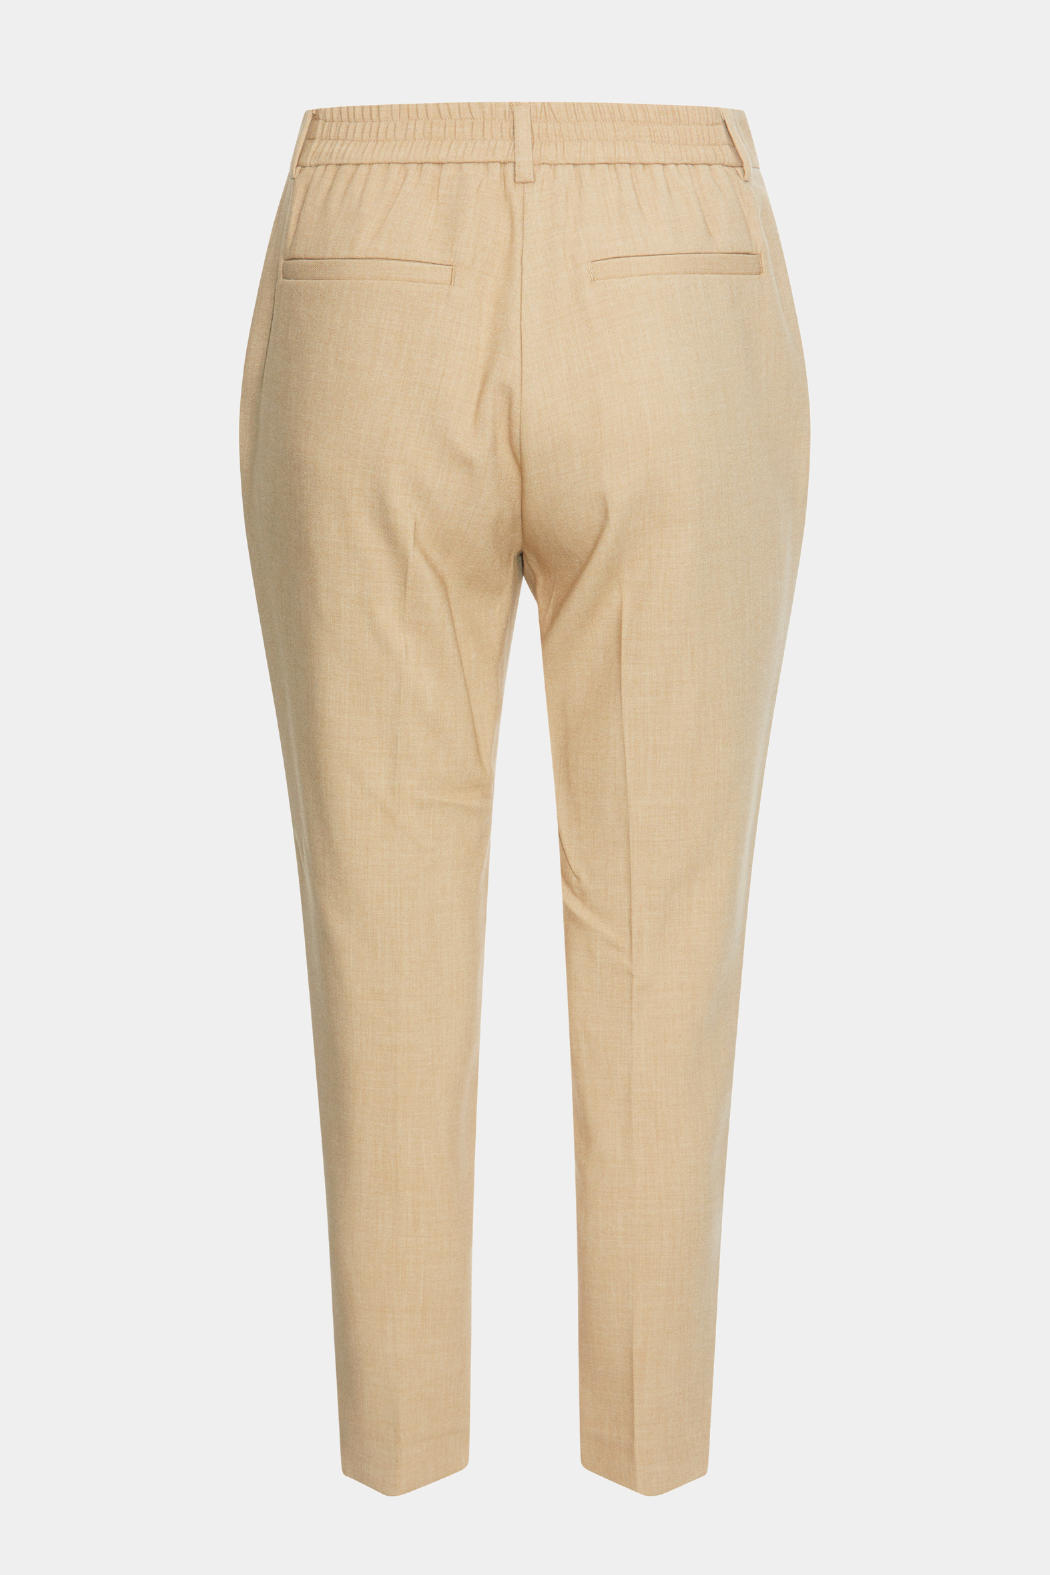 New Bethany pants, beige